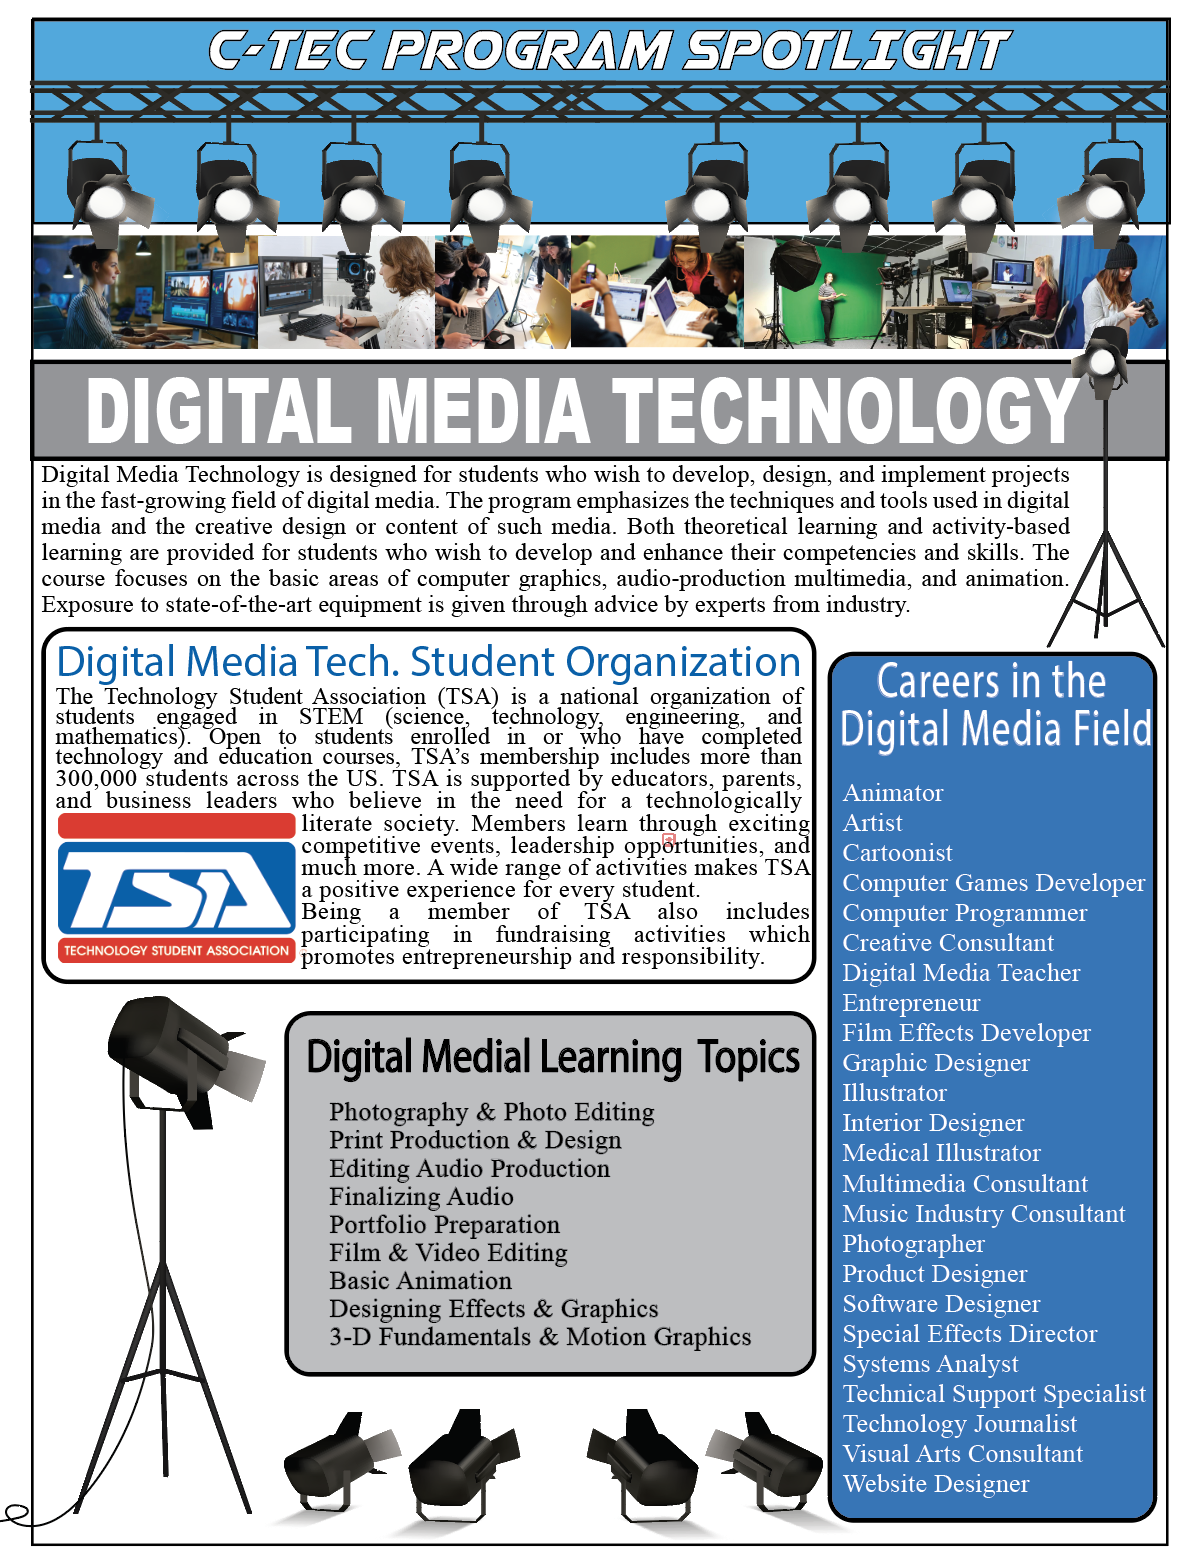 Digital Media Technology